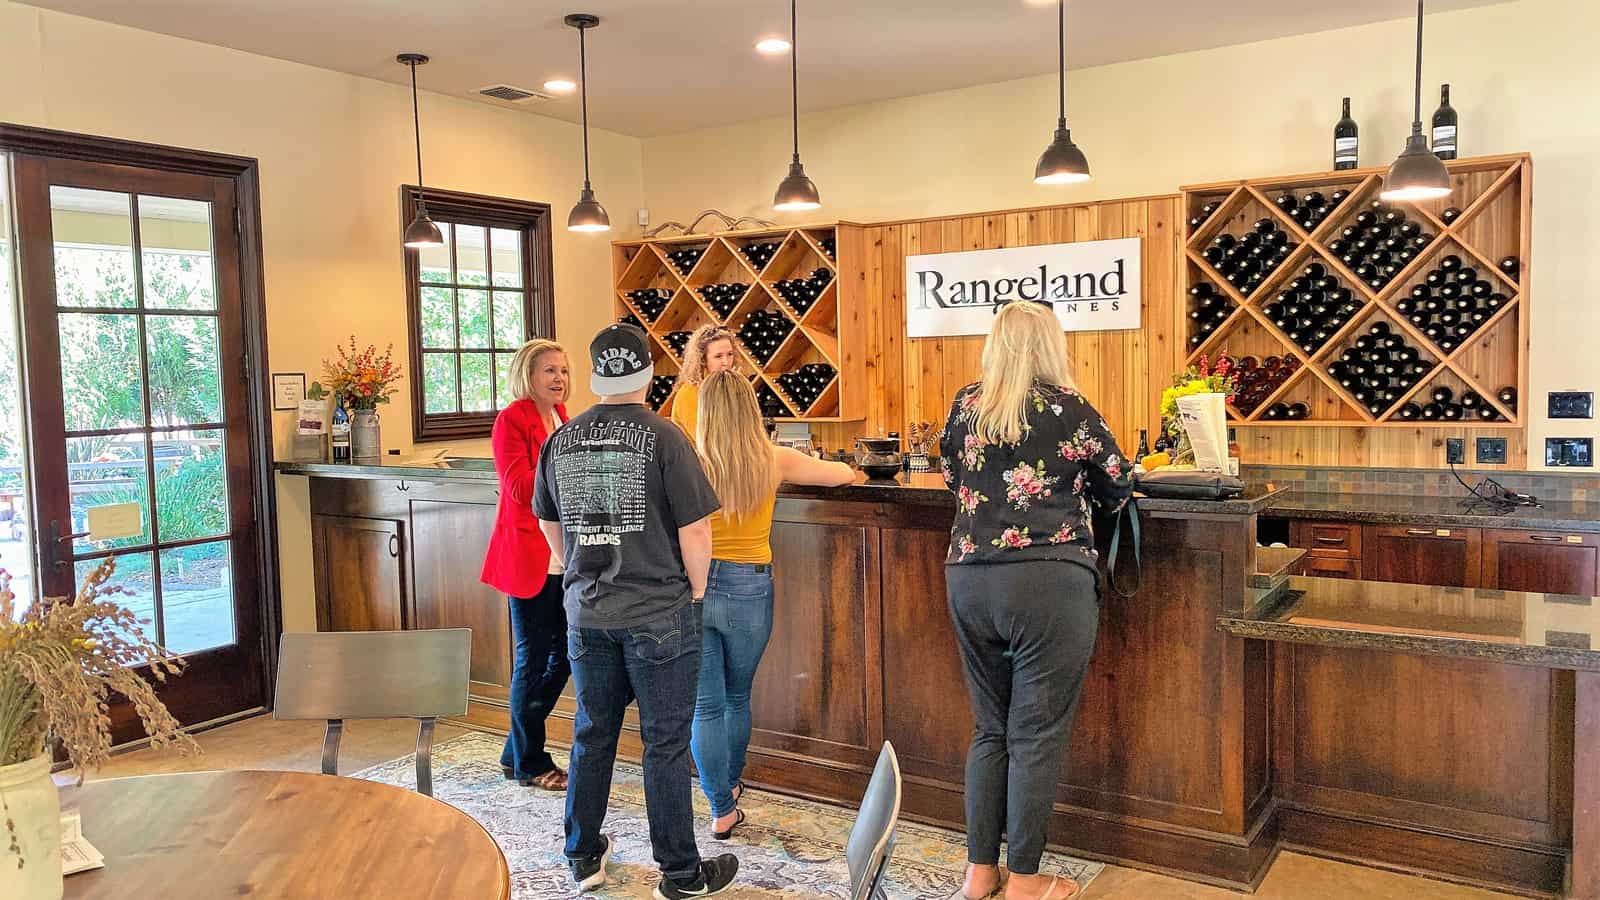 Rangeland winery